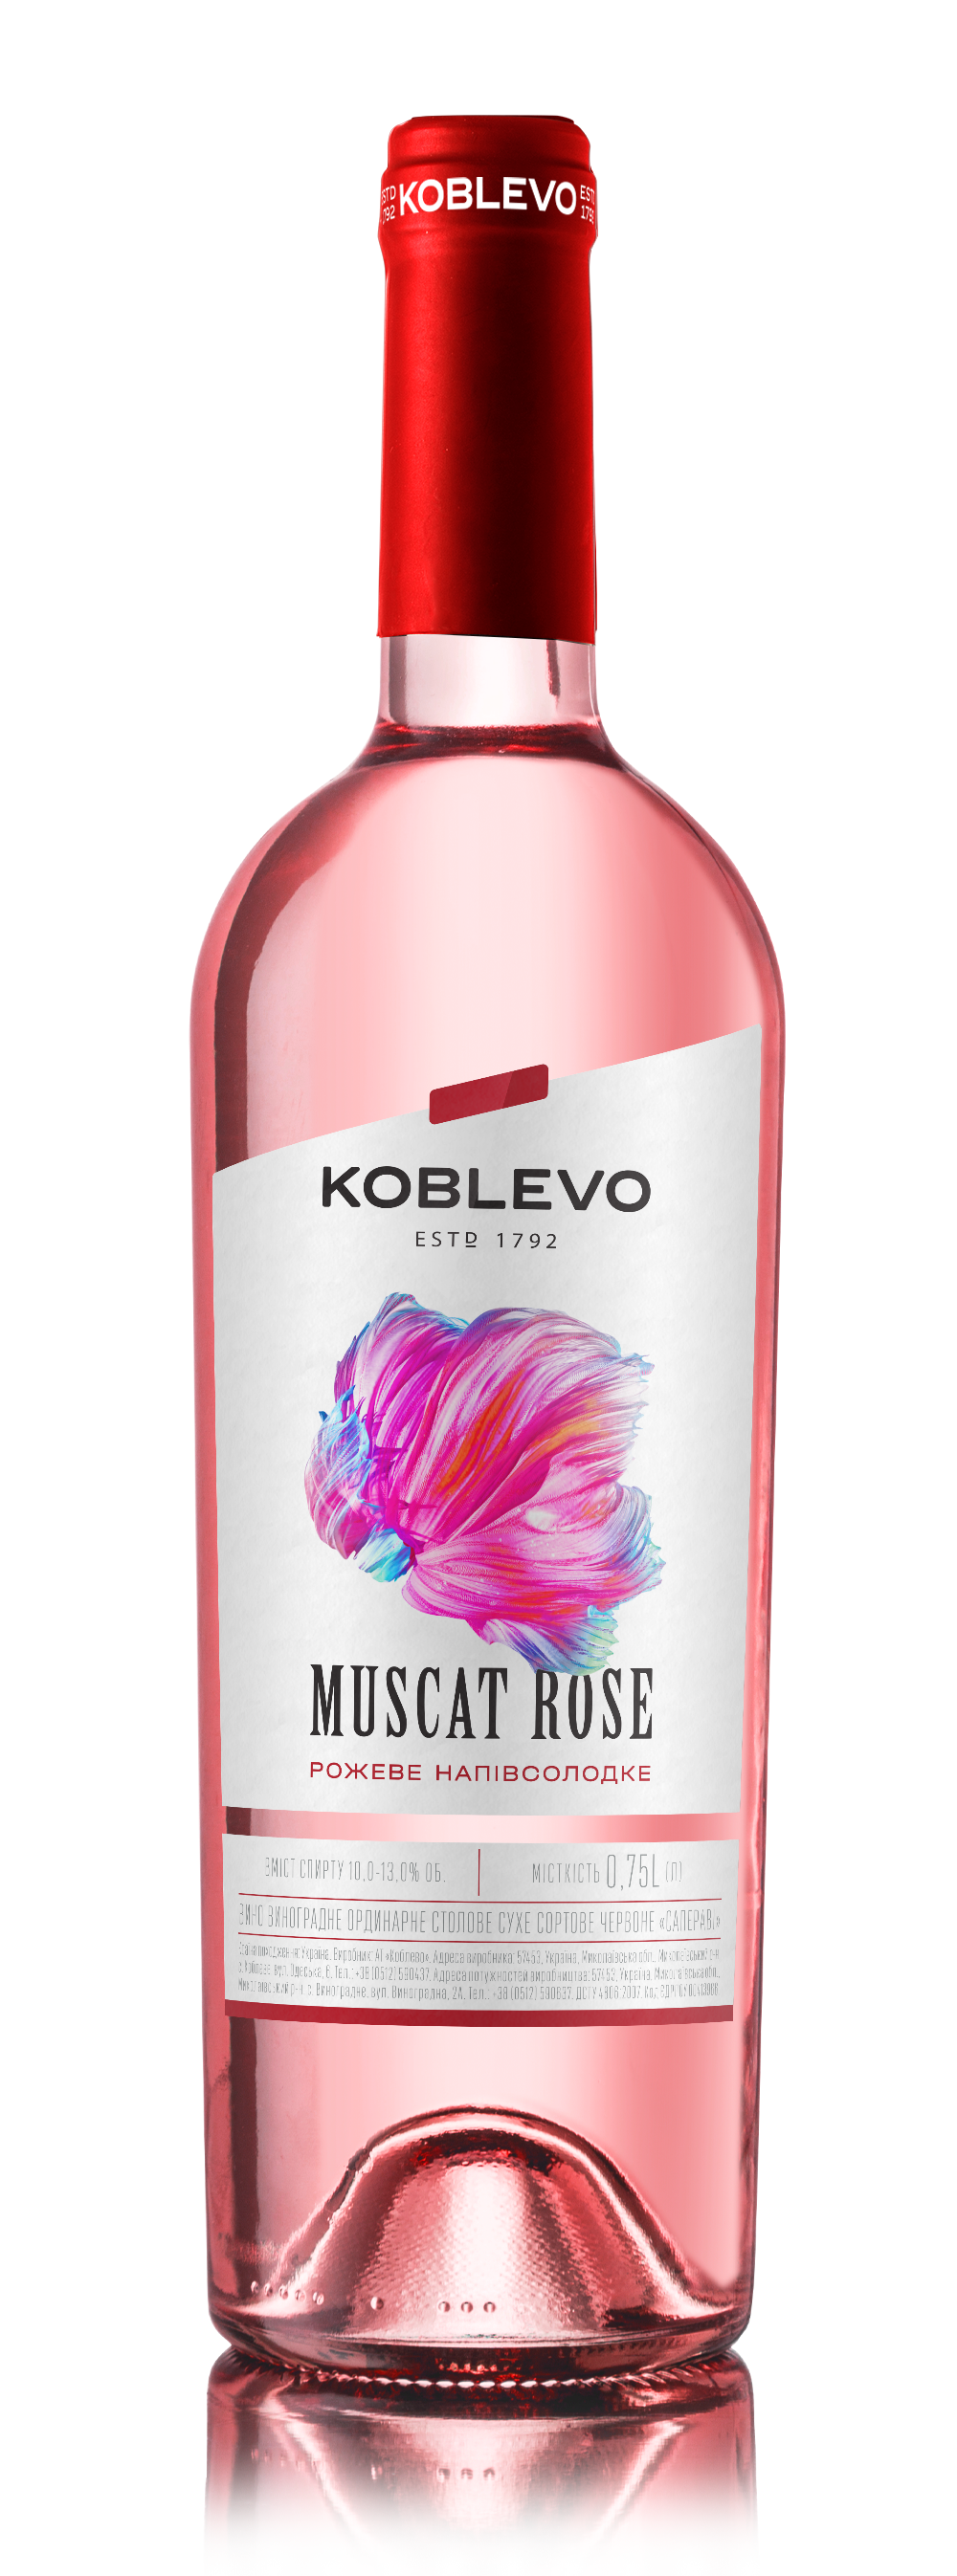 Muscat pink